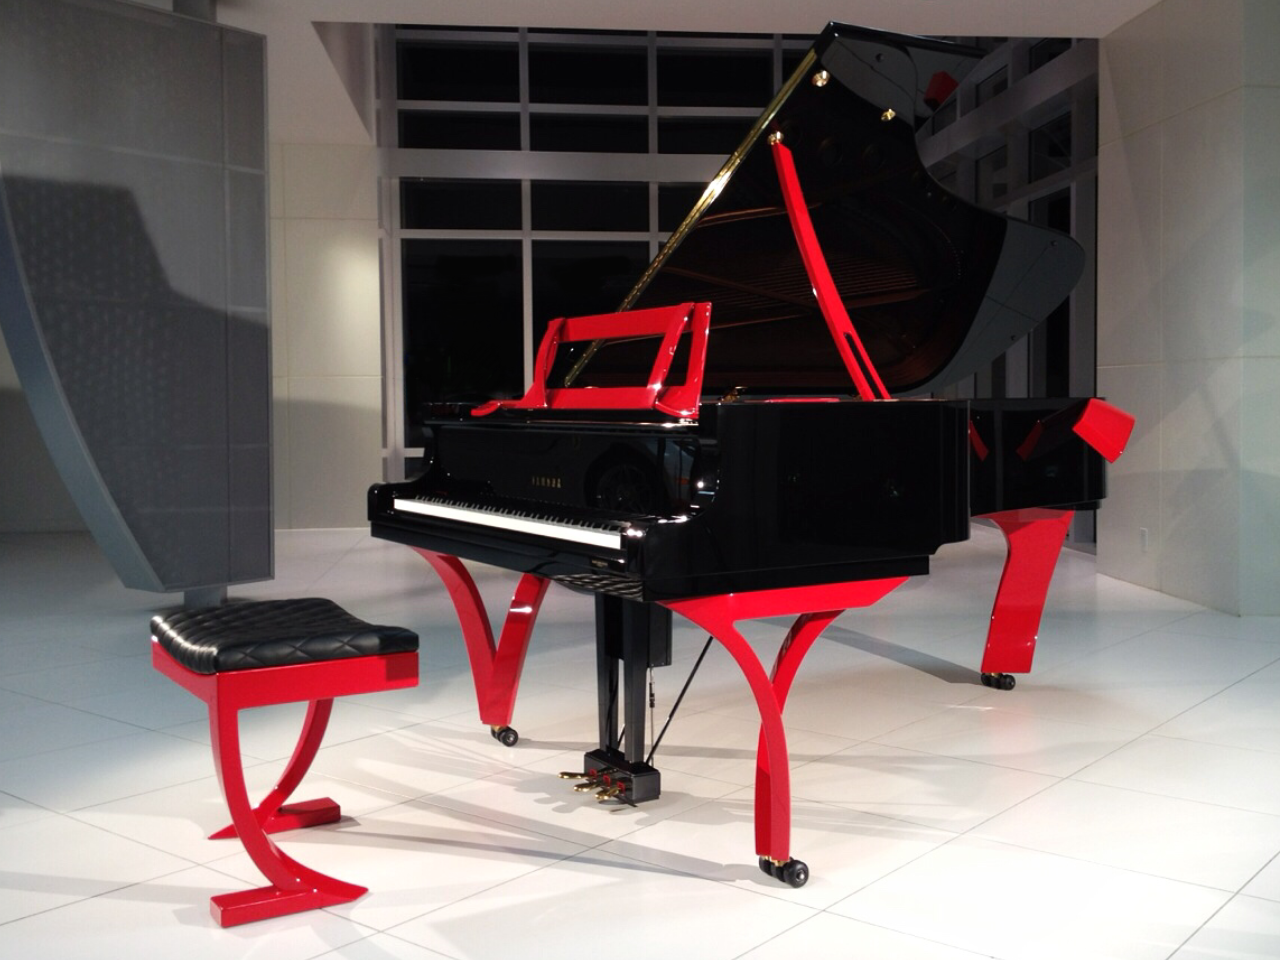 Under Lid: The Custom Pianos of J. Elliott and Co.